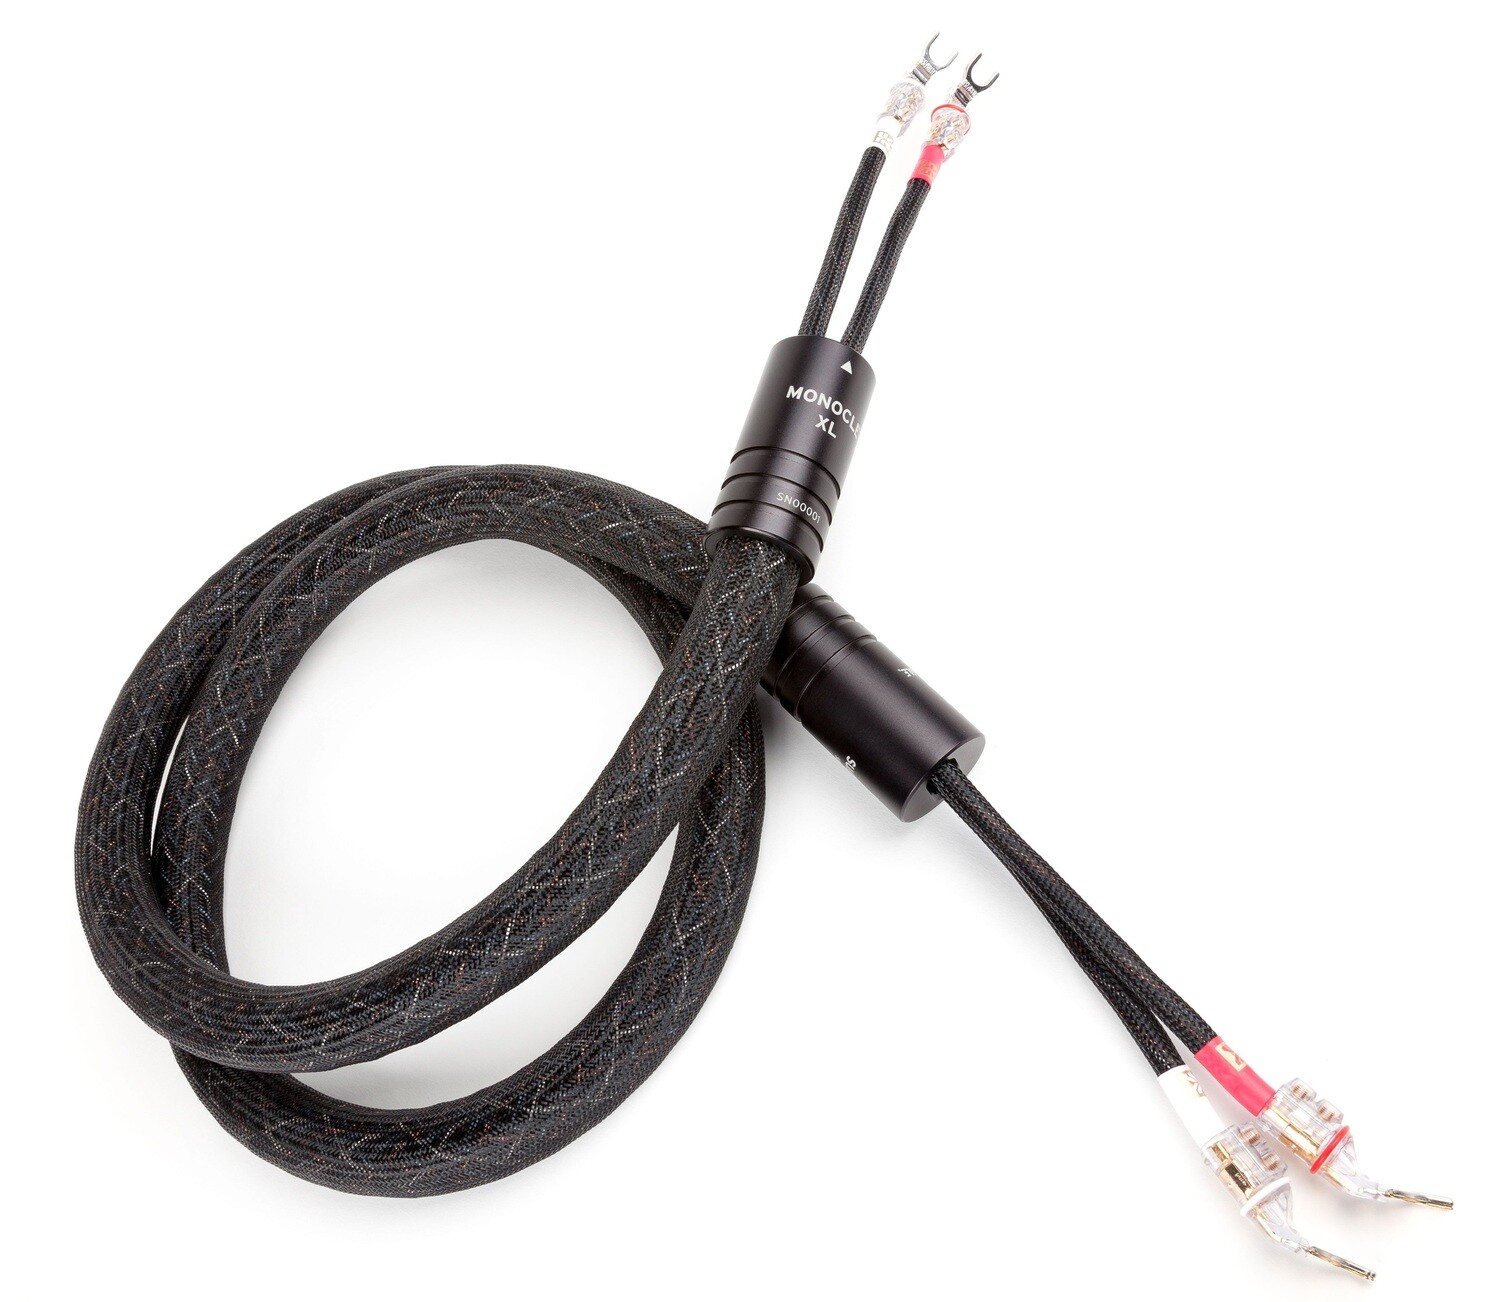 Kimber Kable luidsprekerkabel Monocle XL stereoset 2 stuks 2,5 meter DEMO-kabel 25% KORTING